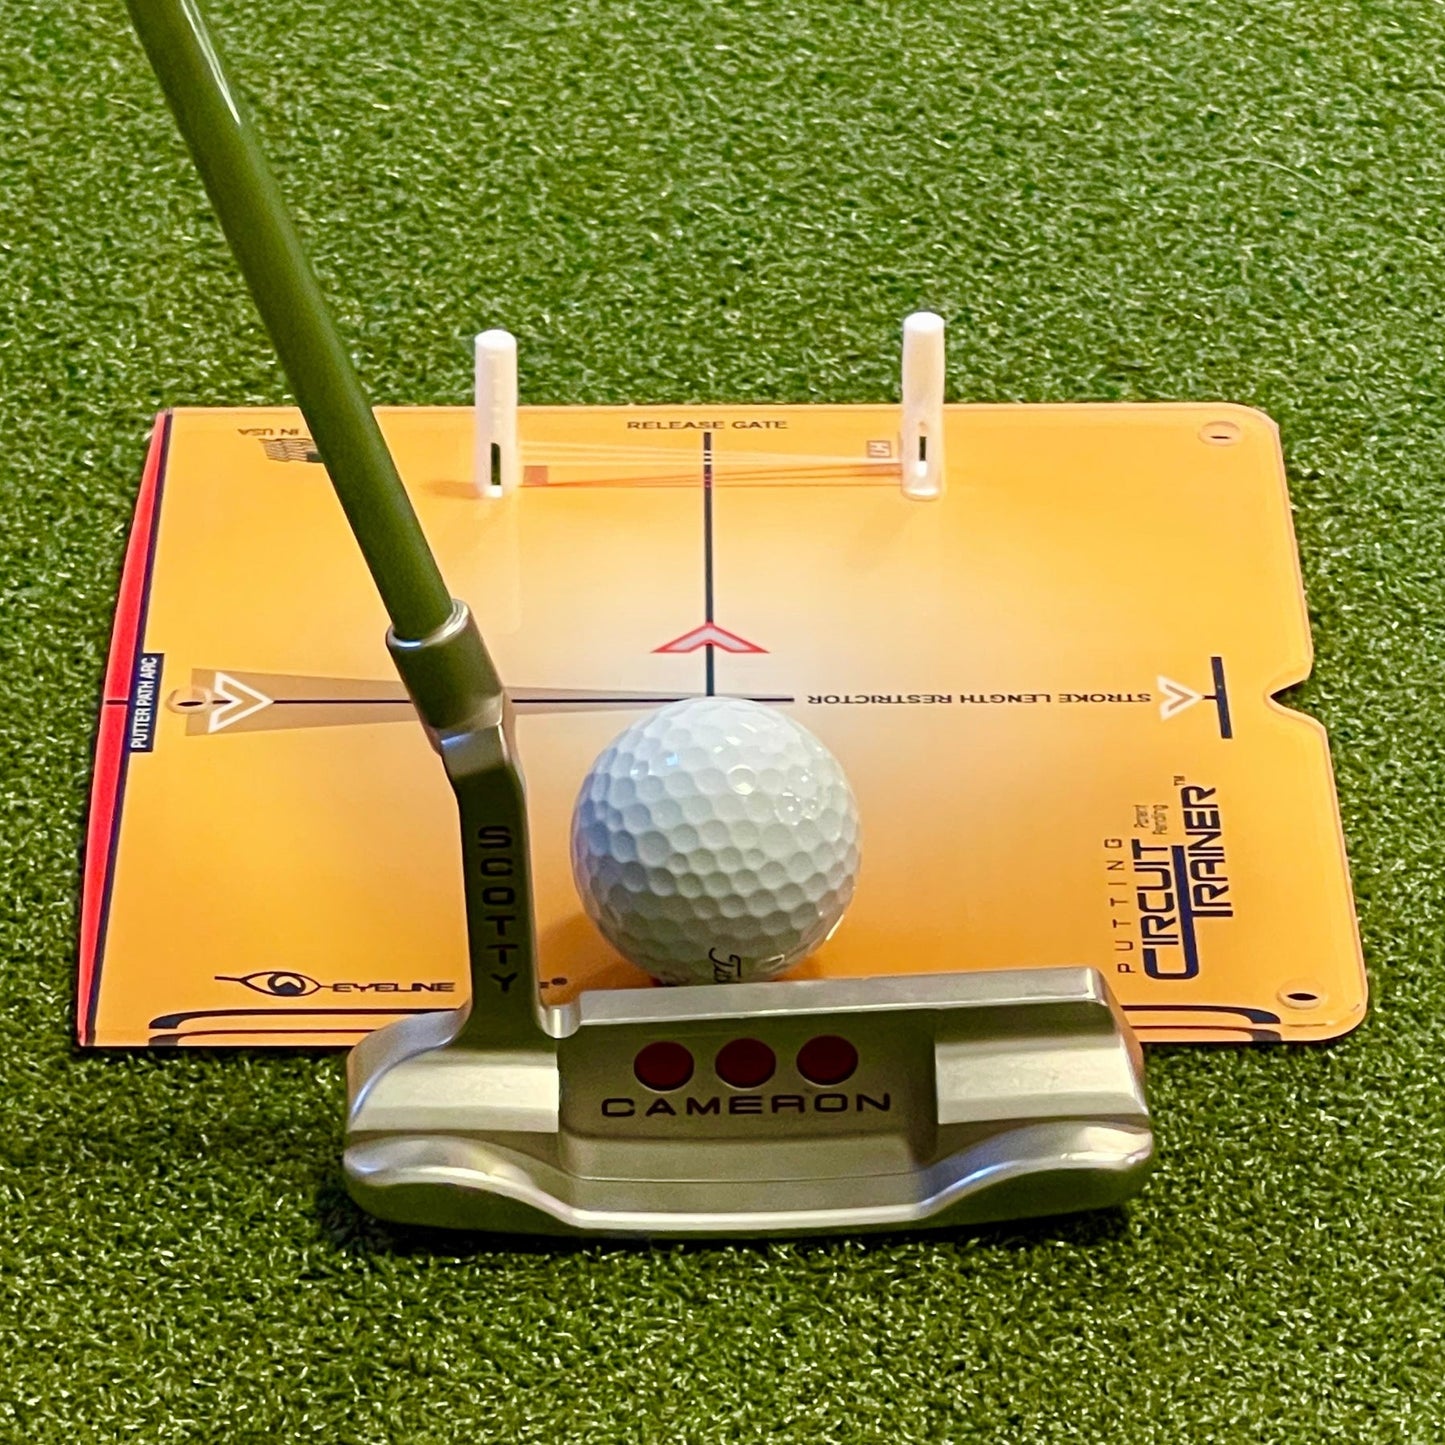 Eyeline Golf Putting Circuit Trainer - 3 Part System - Golf Putting Aid